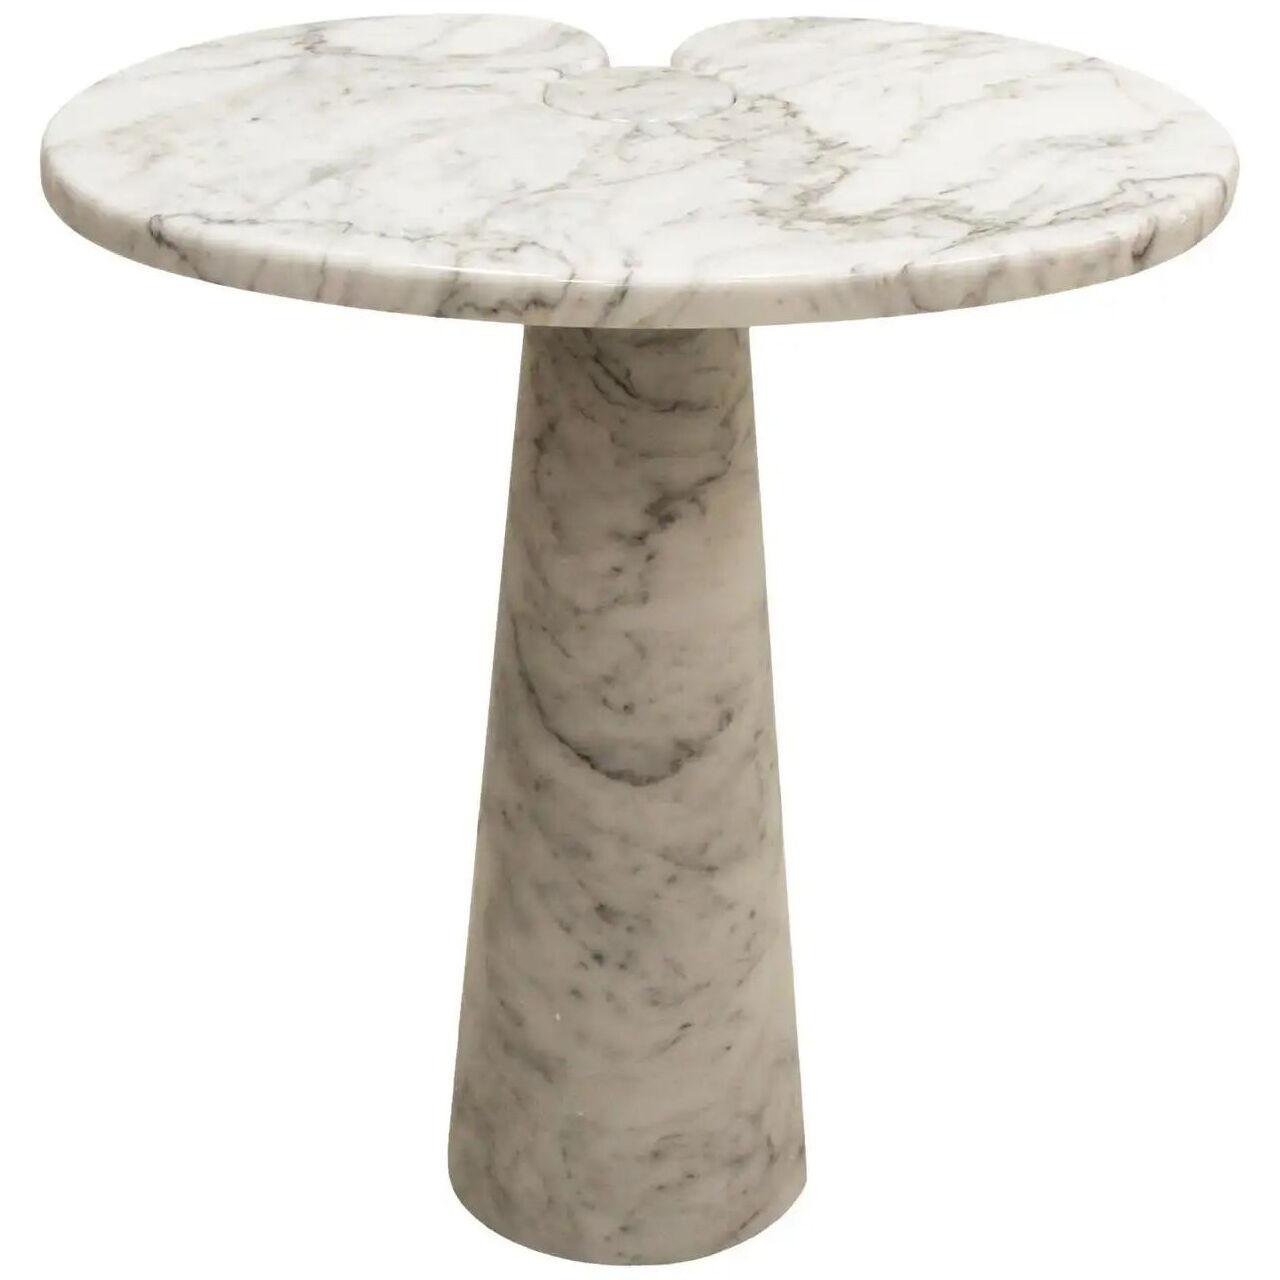 Original Angelo Mangiarotti Italian "Eros" Carrara Arabescato Marble Side Table